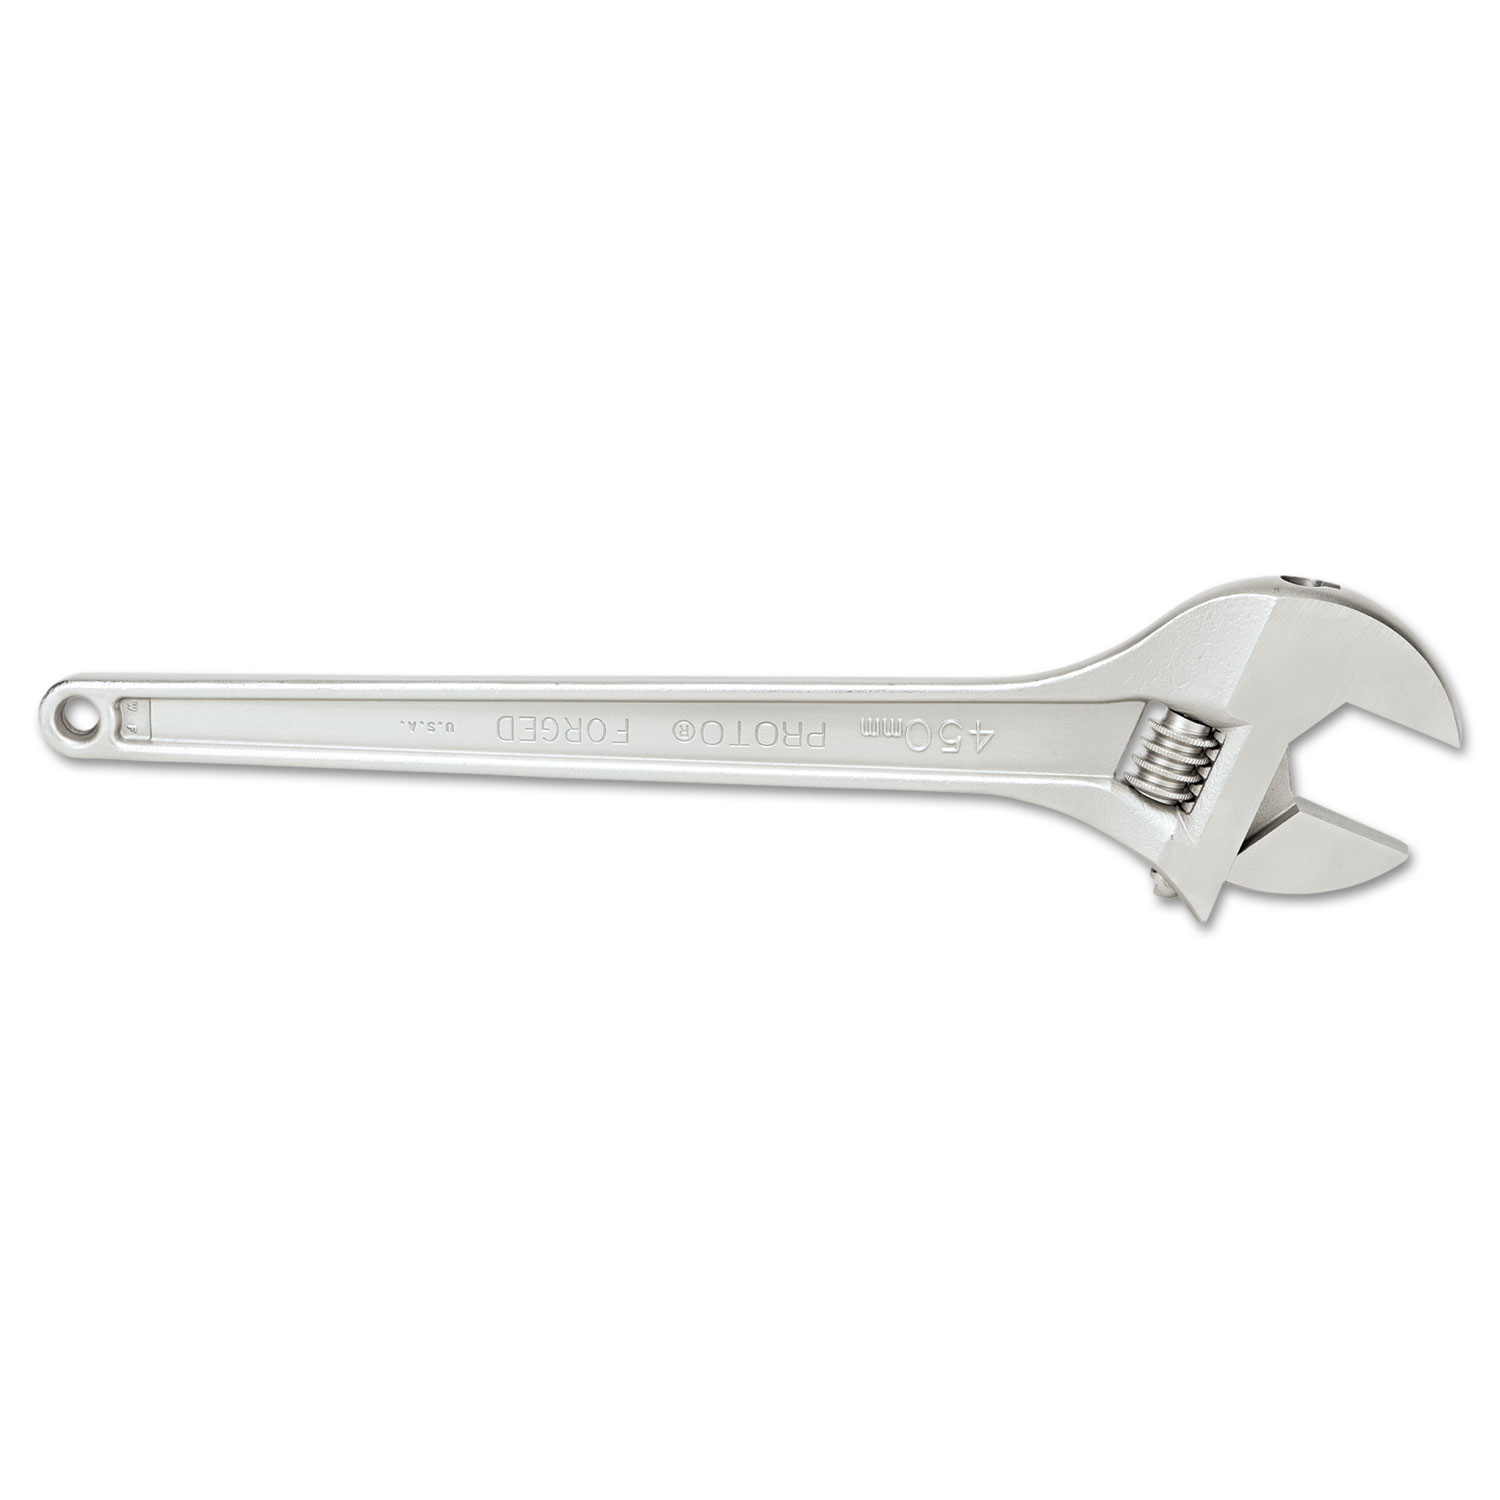 PROTO Adjustable Wrench, 18 Long, 2 1/16 Opening, Satin Chrome